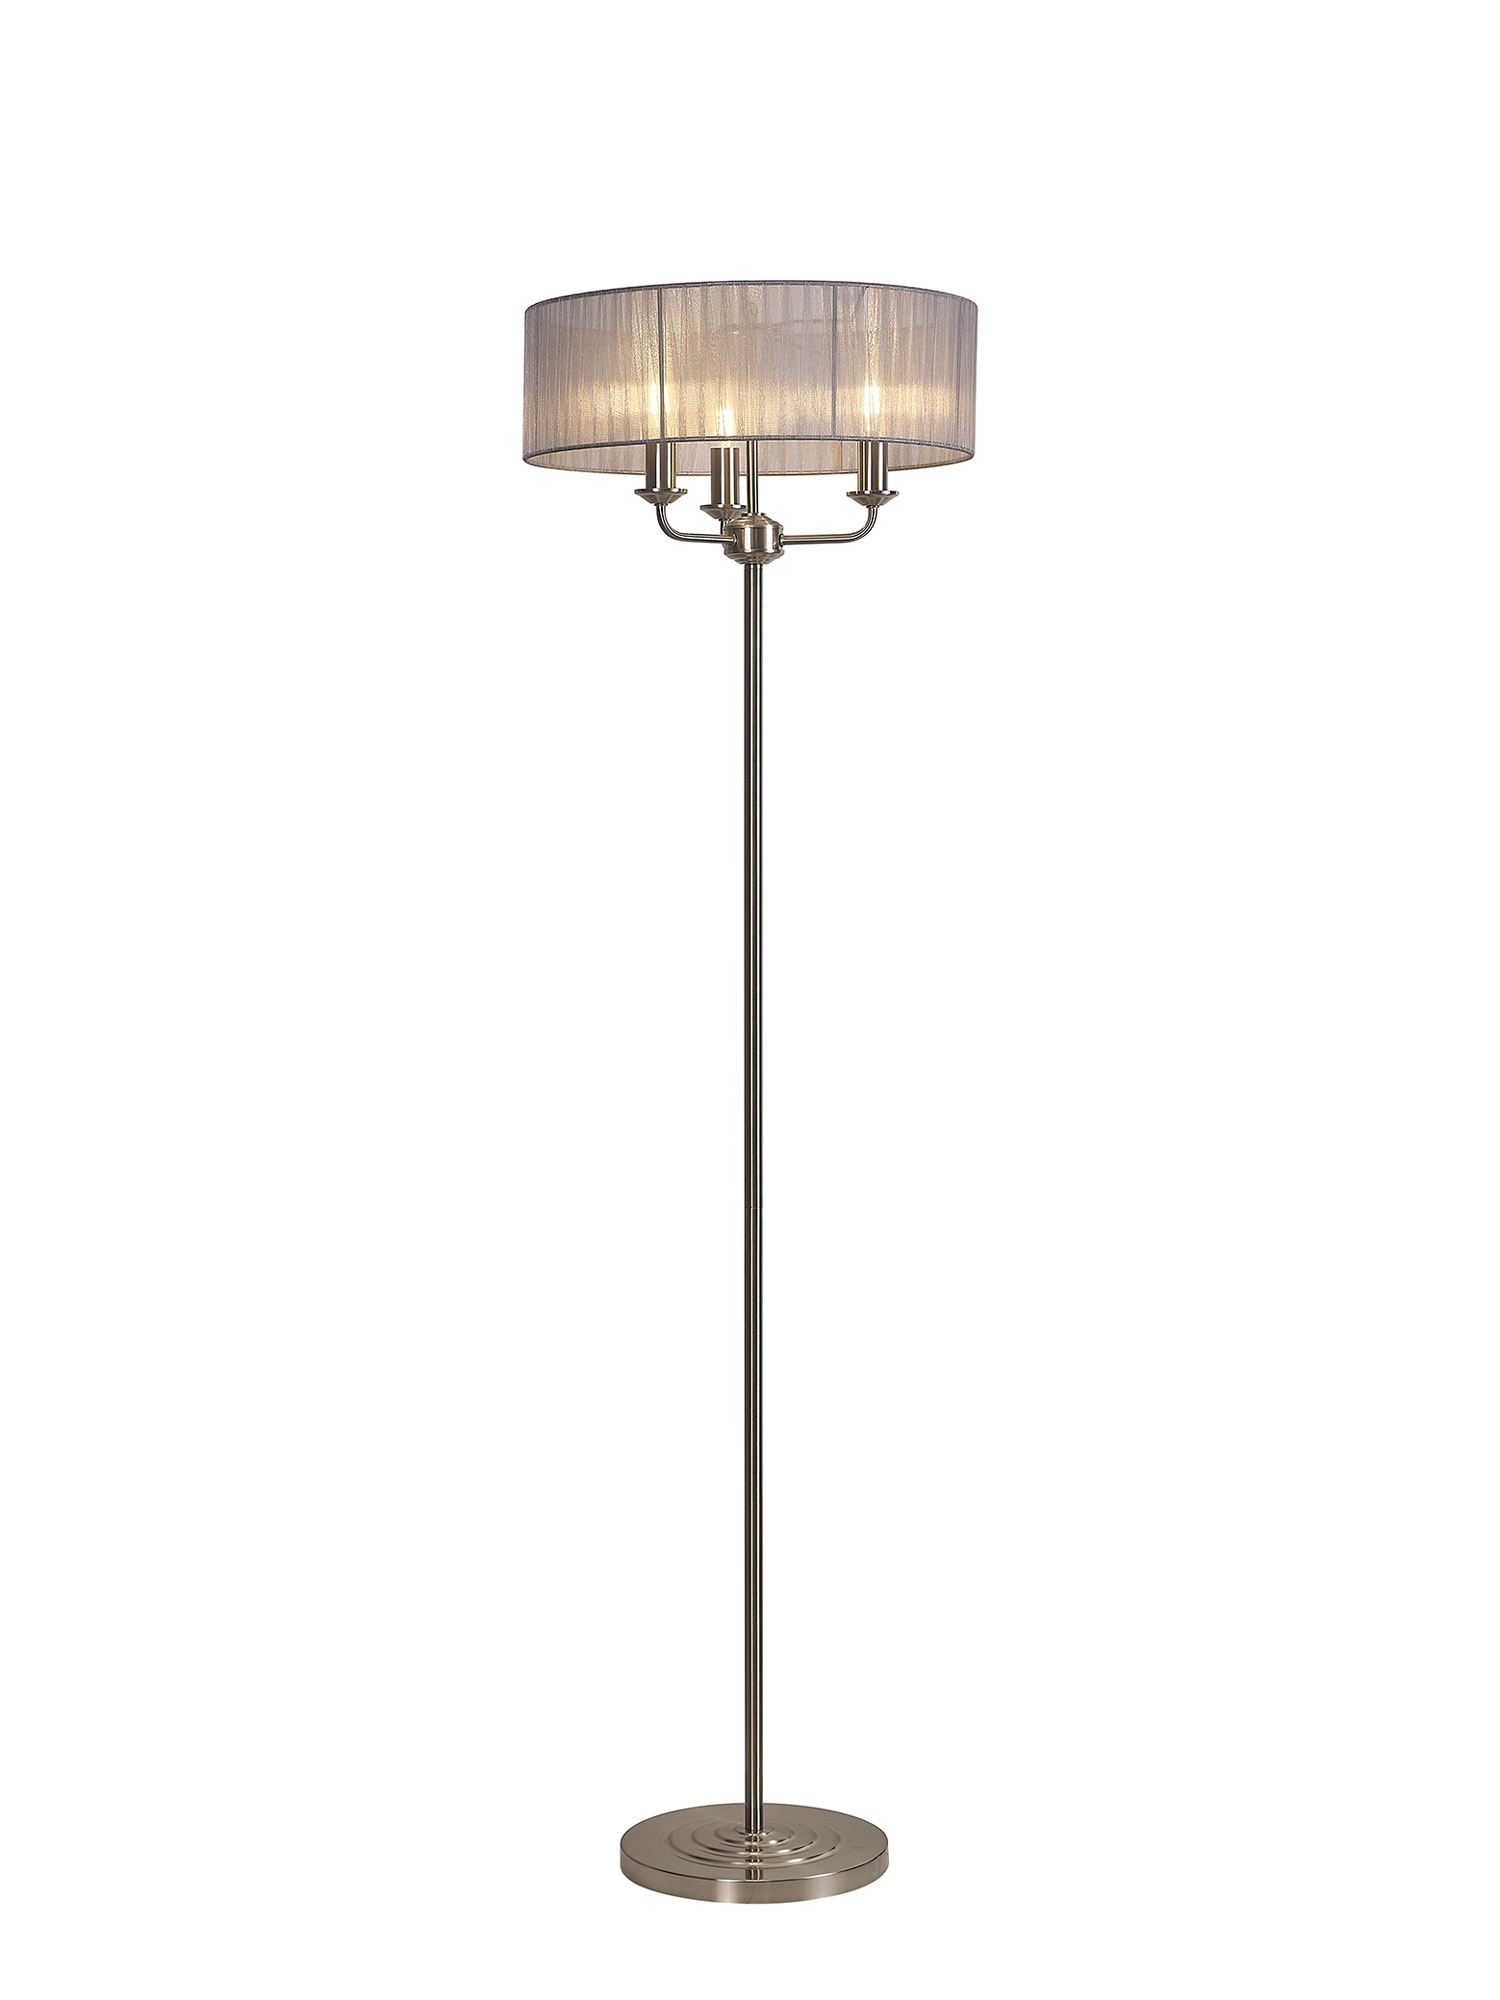 DK0930  Banyan 45cm 3 Light Floor Lamp Satin Nickel, Grey